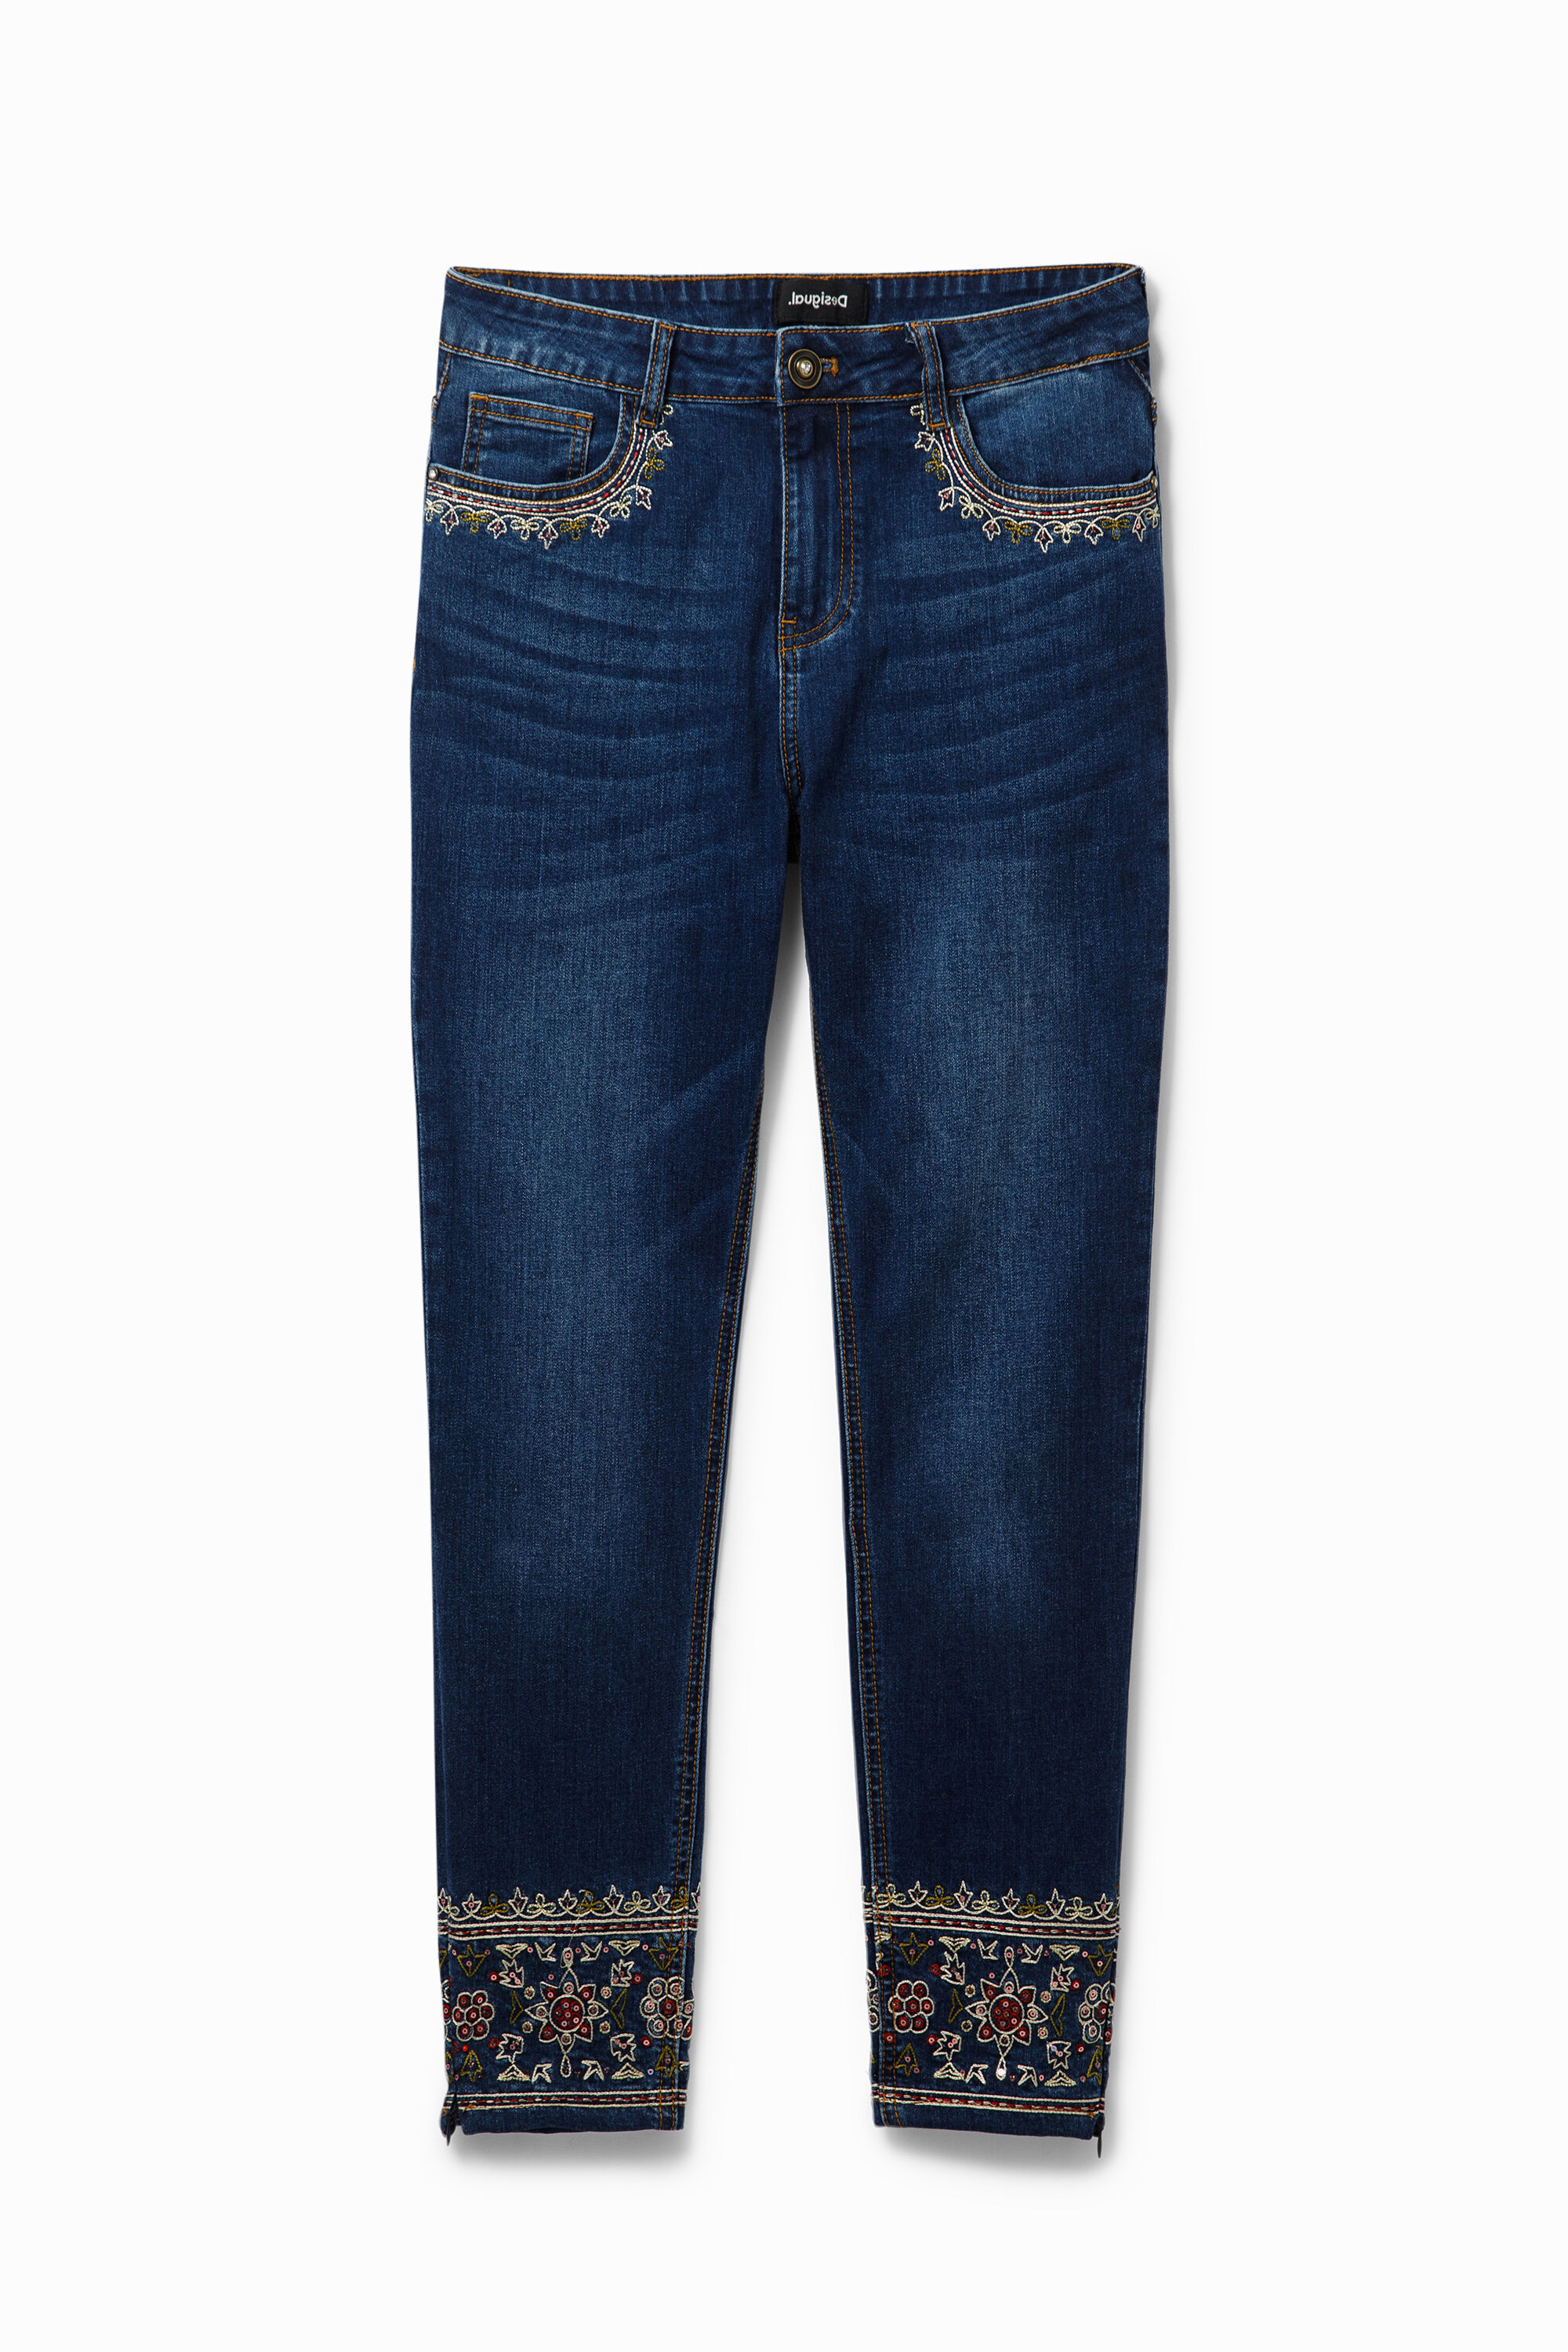 Desigual Skinny jeans in exotische stijl - BLUE